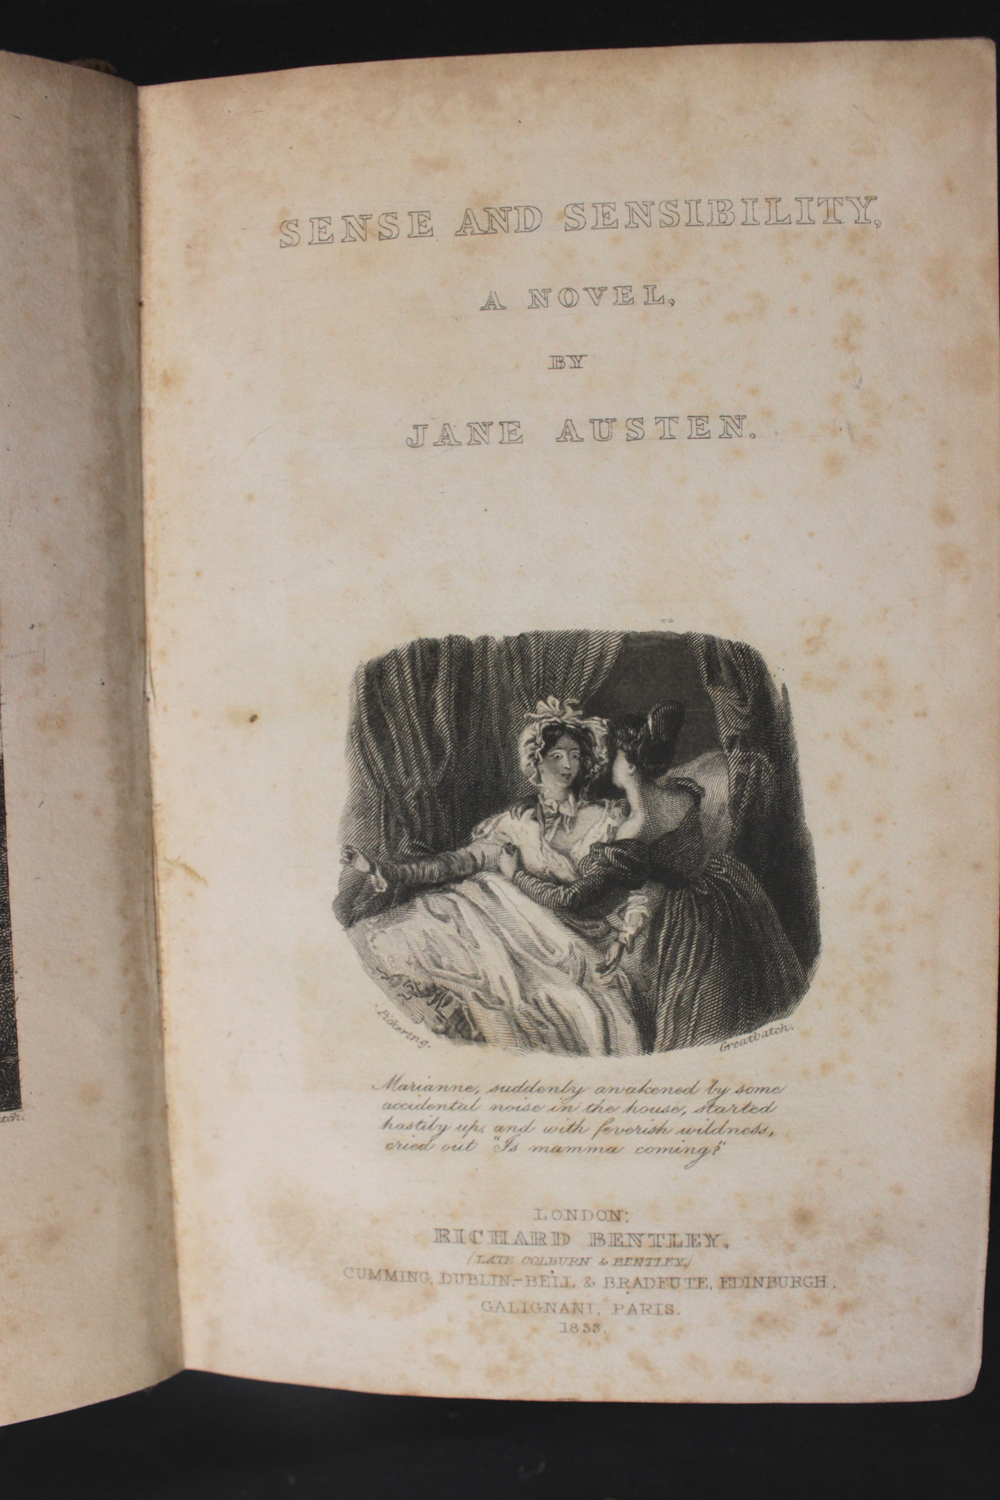 JANE AUSTEN: SENSE AND SENSIBILITY, A NOVEL, London, Richard Bentley, 1833, 1st single volume